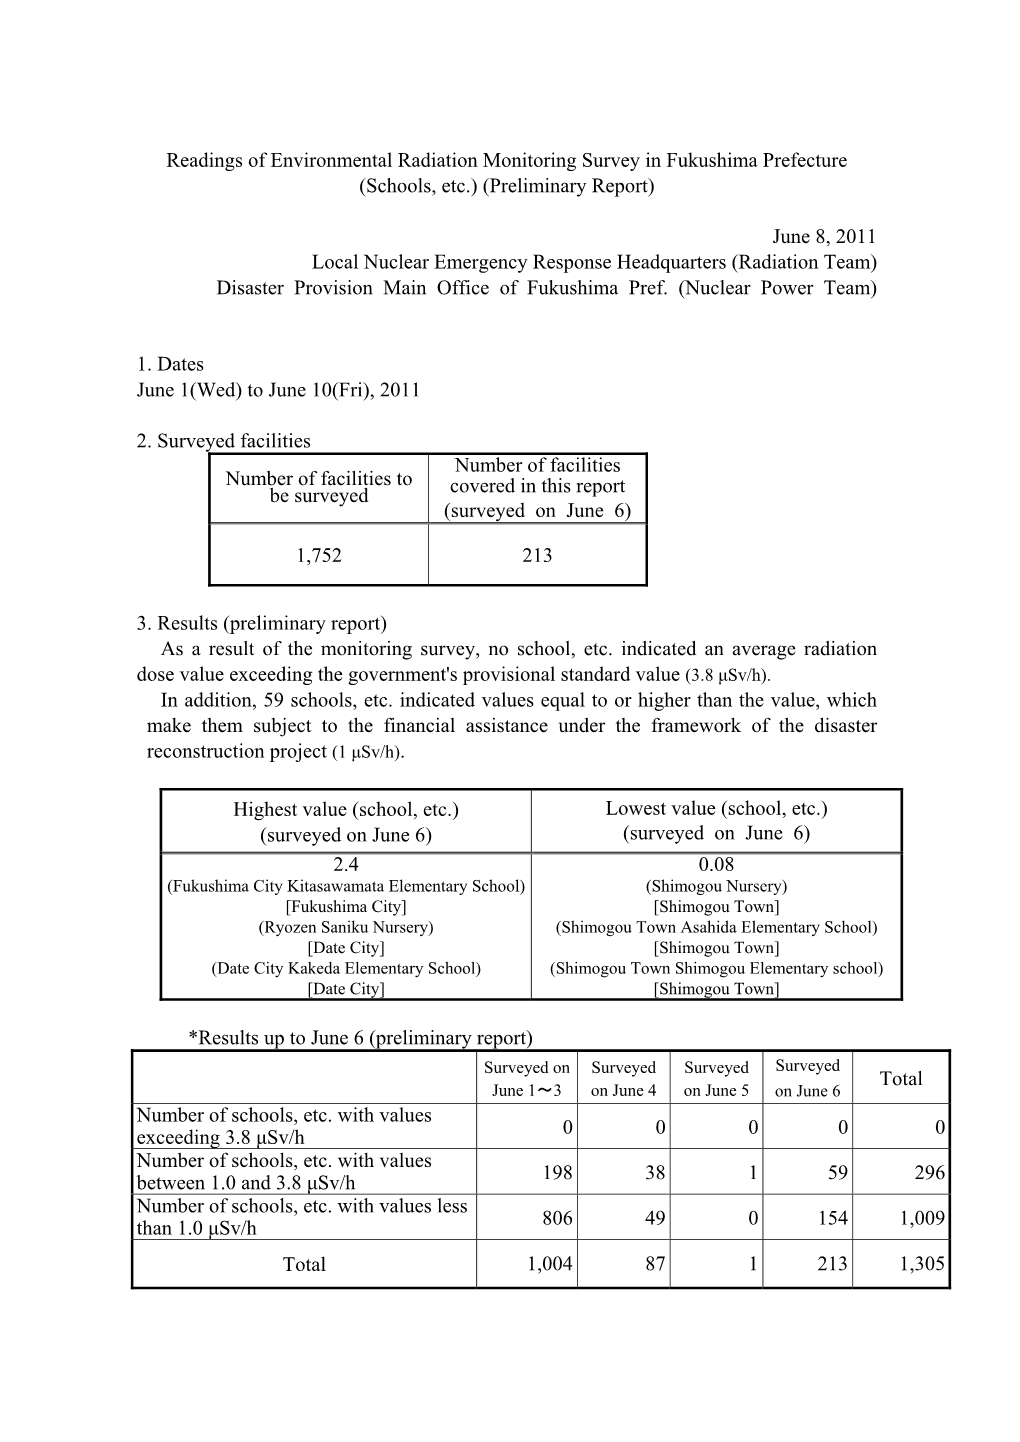 Readings of Environmental Radiation Monitoring Survey in Fukushima Prefecture (Schools, Etc.) (Preliminary Report)